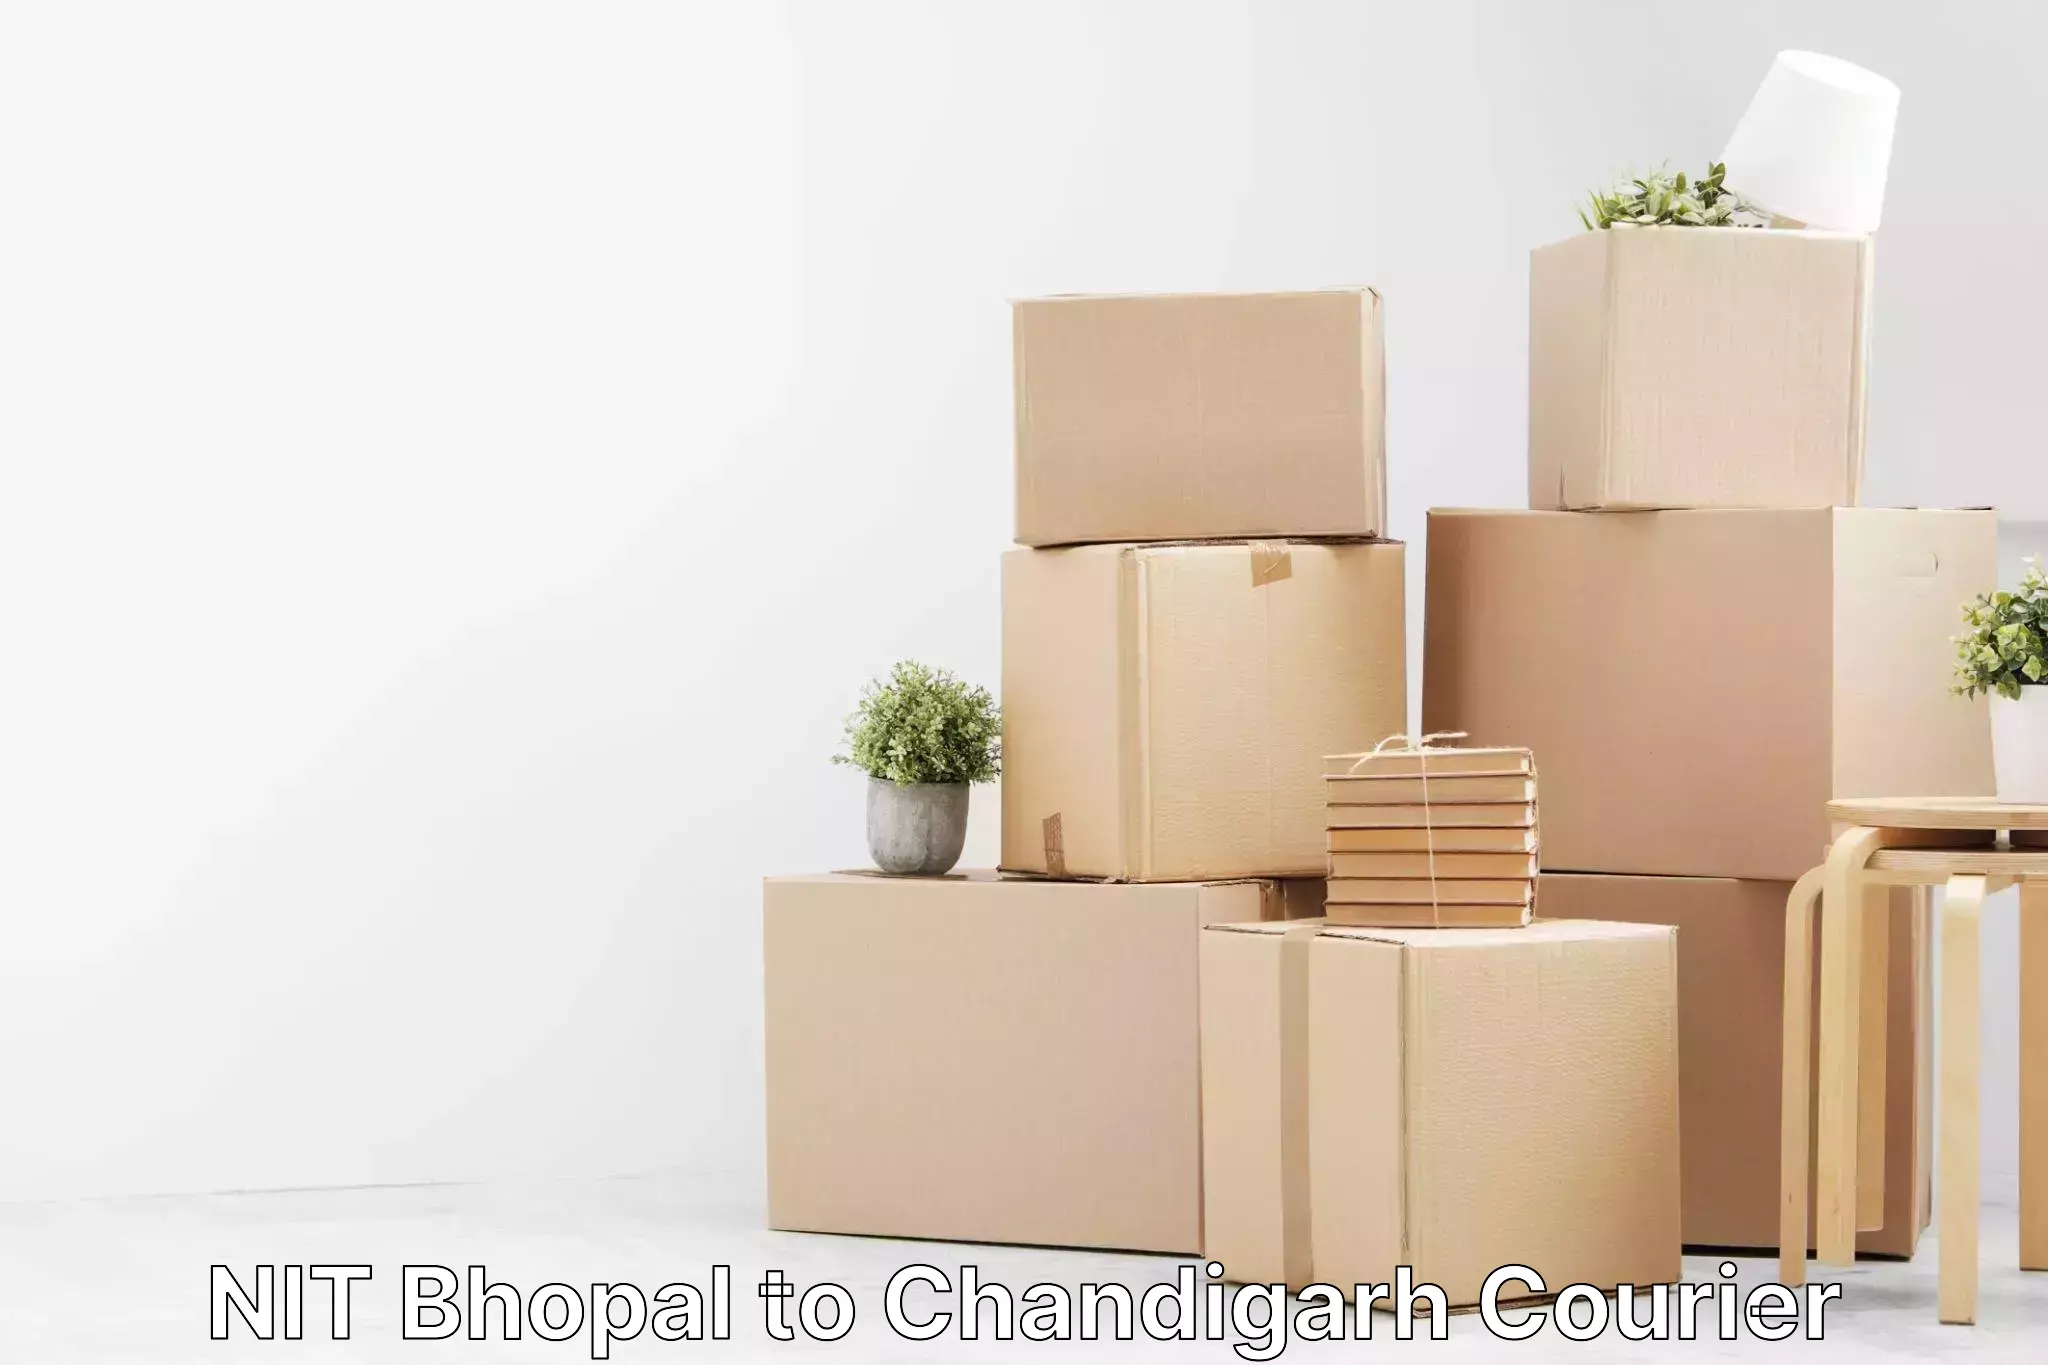 International parcel service NIT Bhopal to Chandigarh